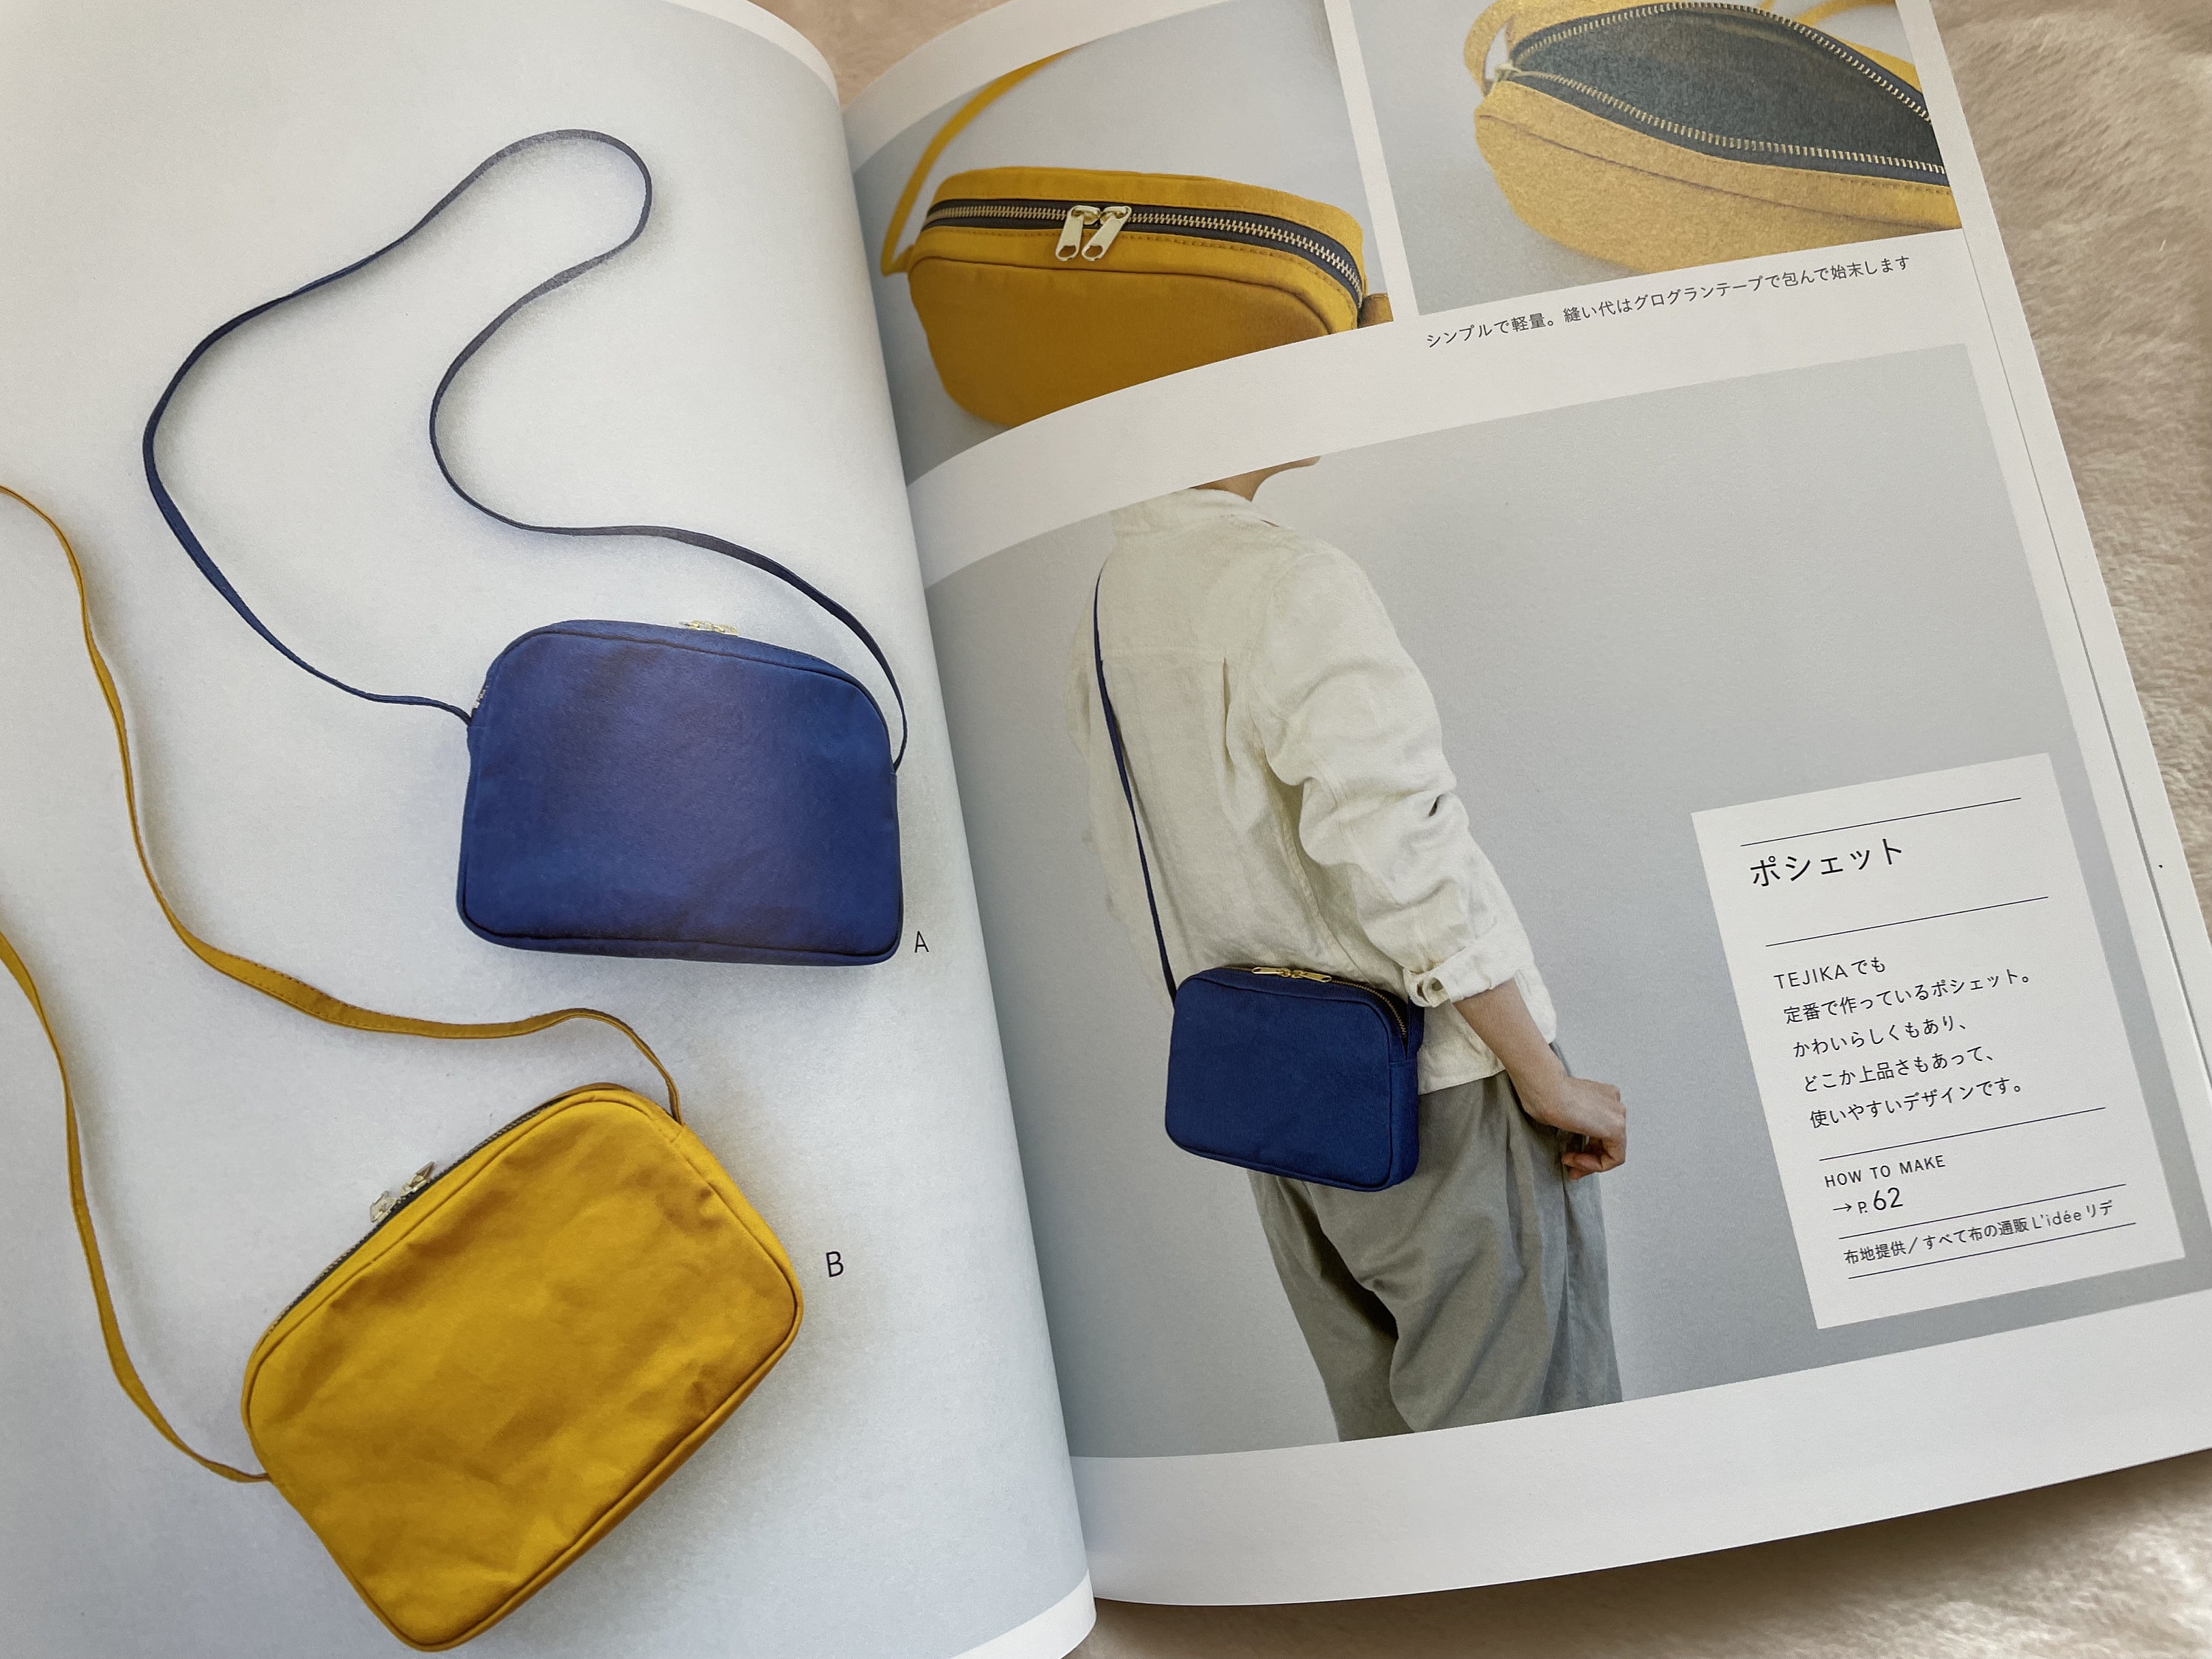 Hemp Yarn Bags - japanese craft book